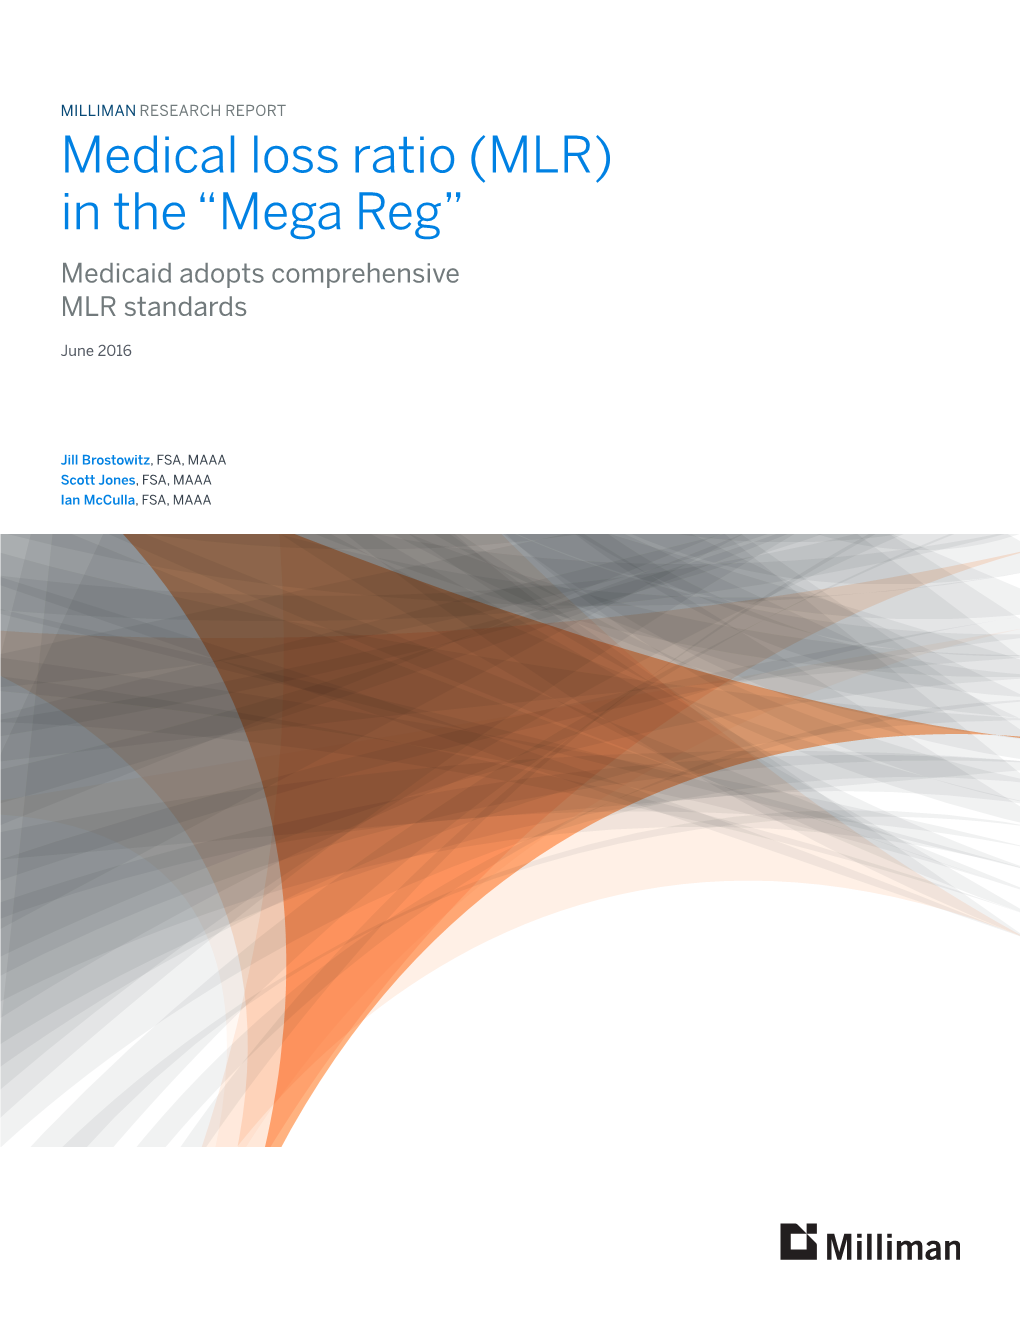 Medical Loss Ratio (MLR) in the “Mega Reg” Medicaid Adopts Comprehensive MLR Standards